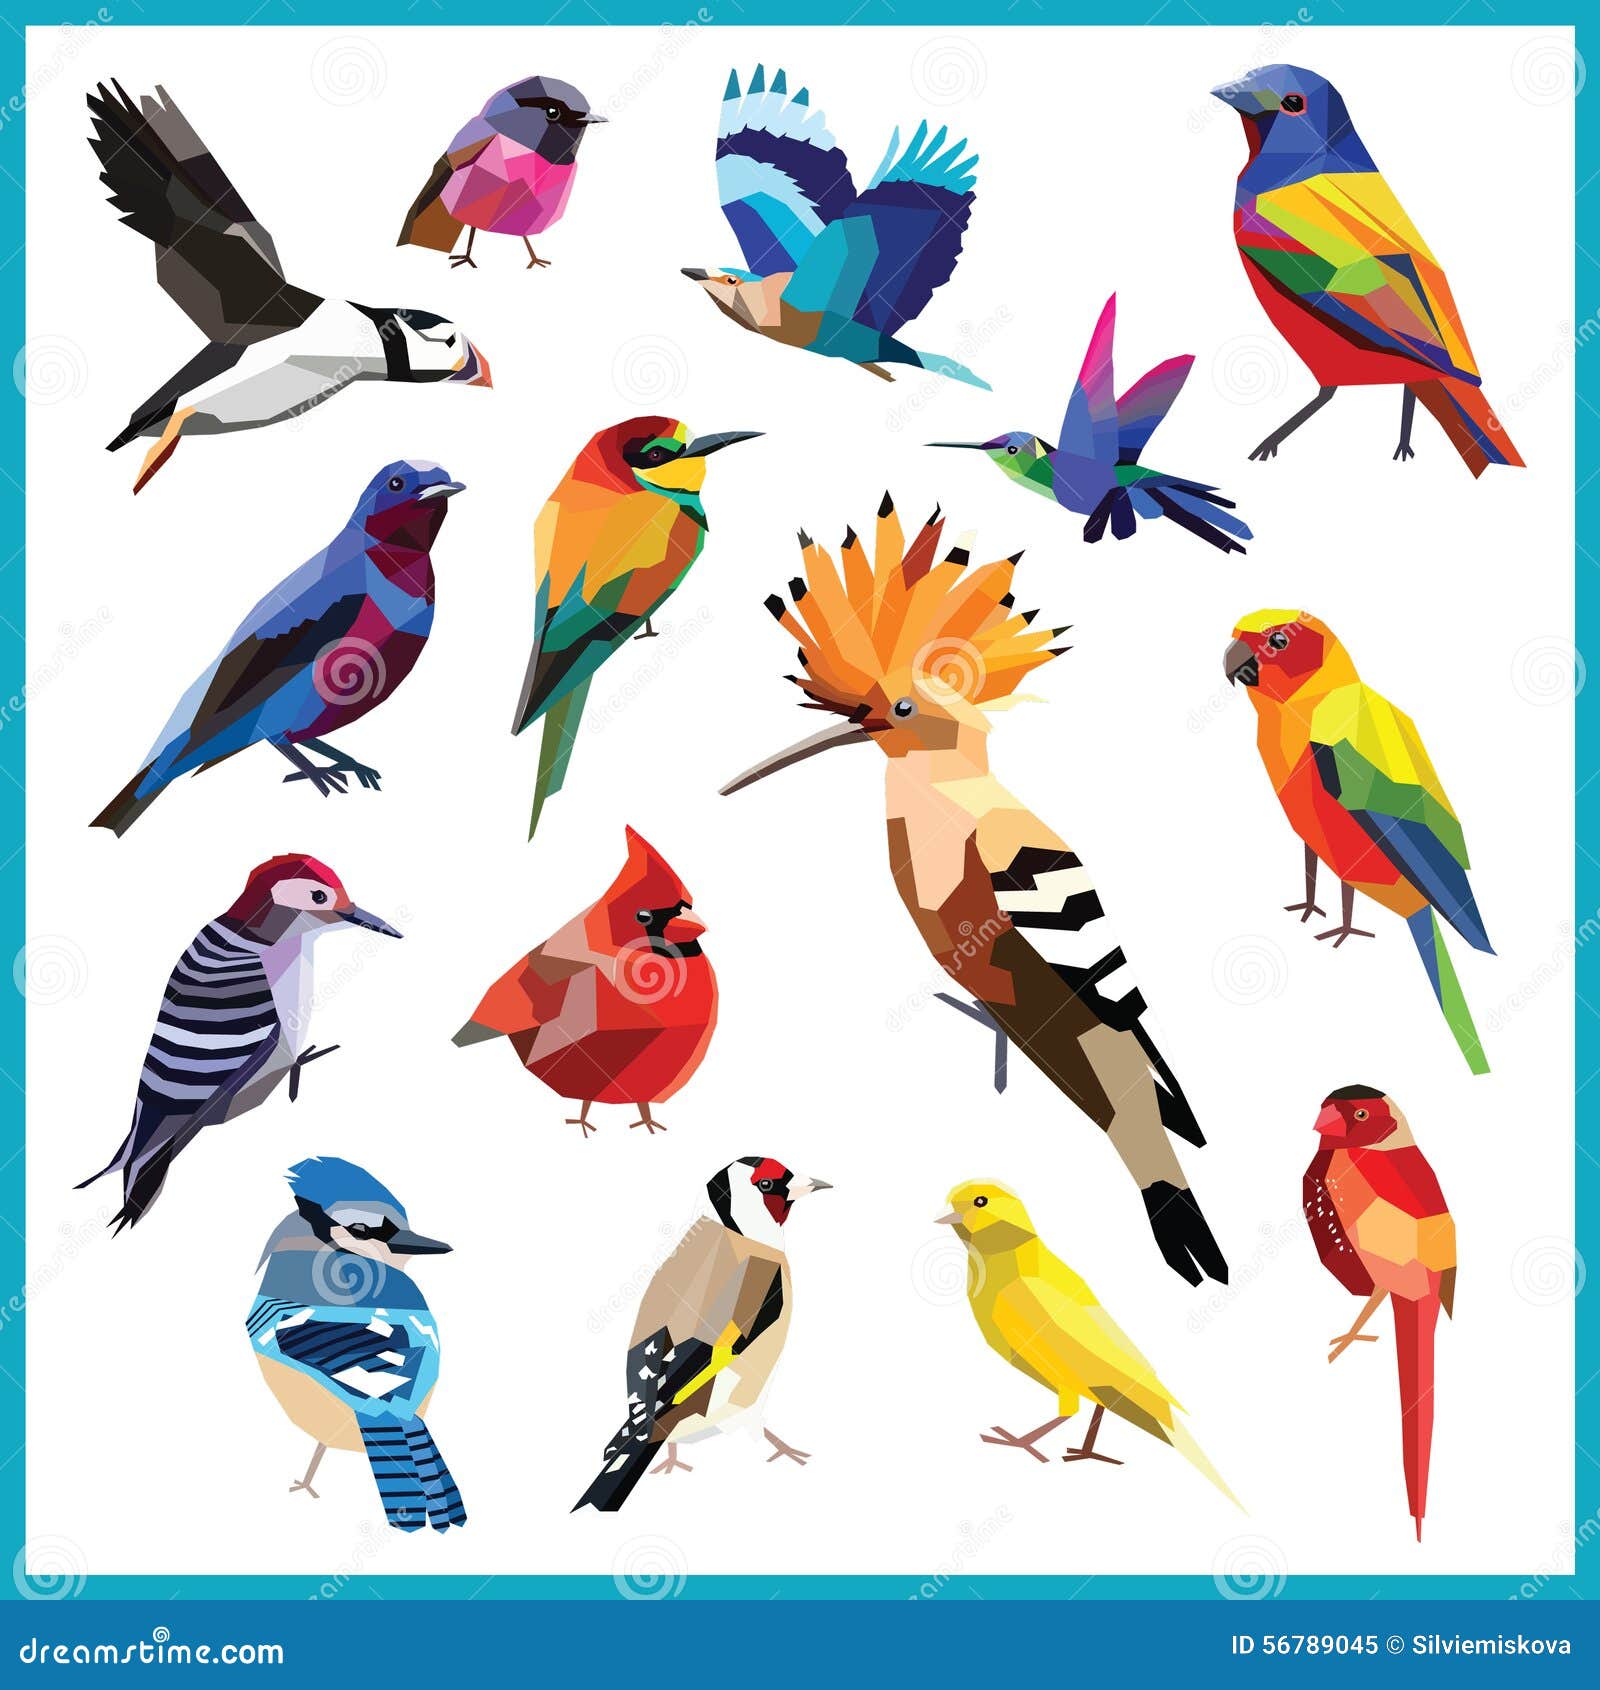 Blue Jay Cardinal Stock Illustrations – 104 Blue Jay Cardinal